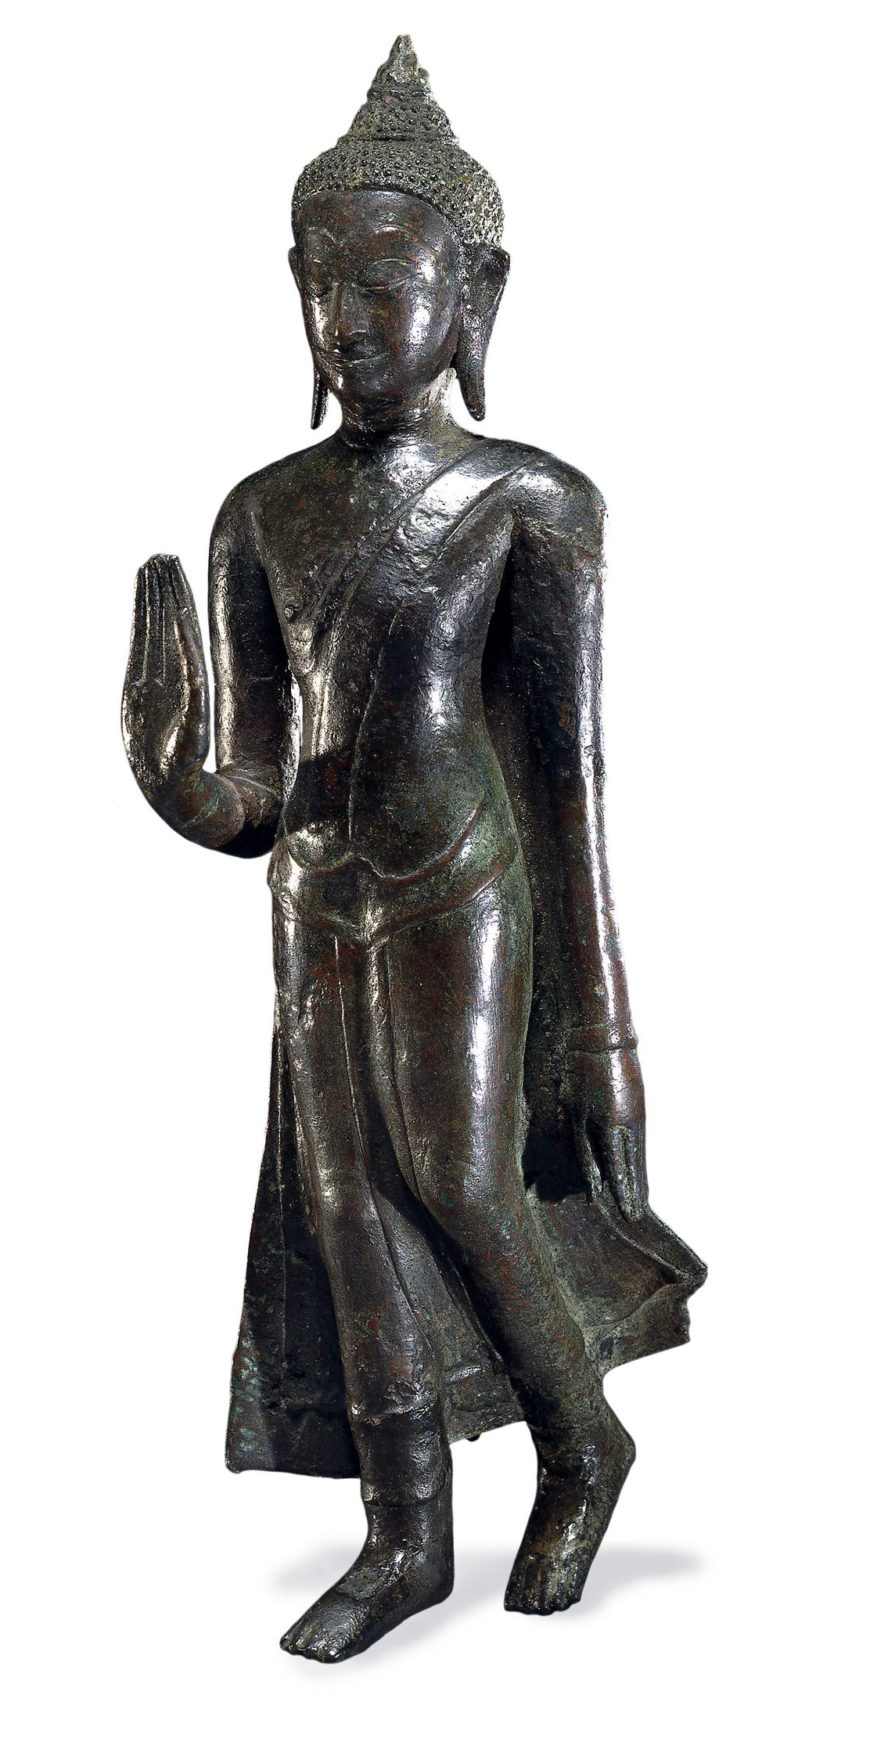 Bronze figure of the walking Buddha, Thailand, Sukothai period, 14th century, bronze, 28 cm high © Trustees of the British Museum